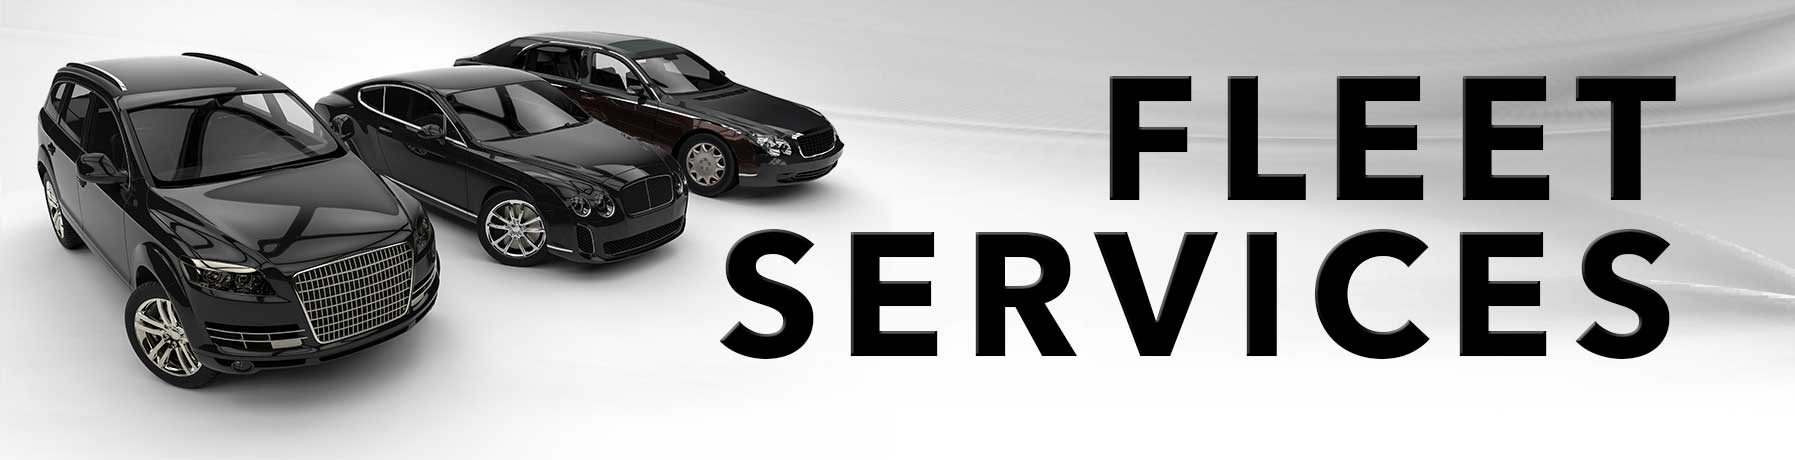 We provide fleet services